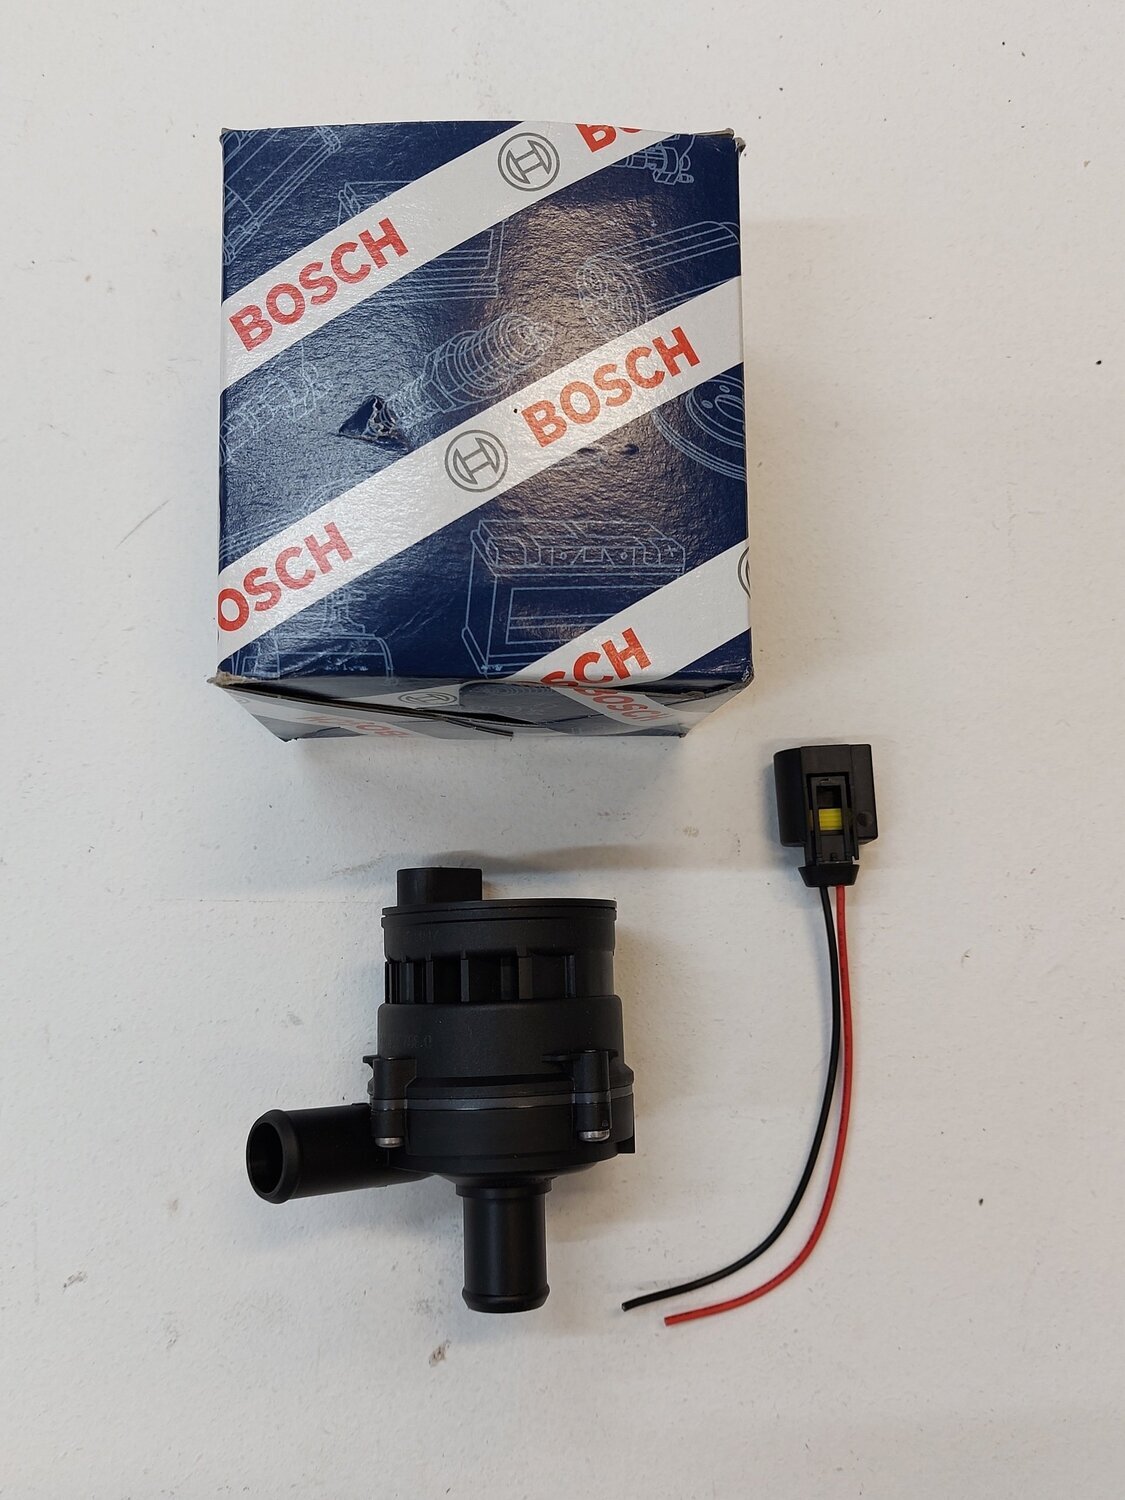 Bosch chargecooler pumps